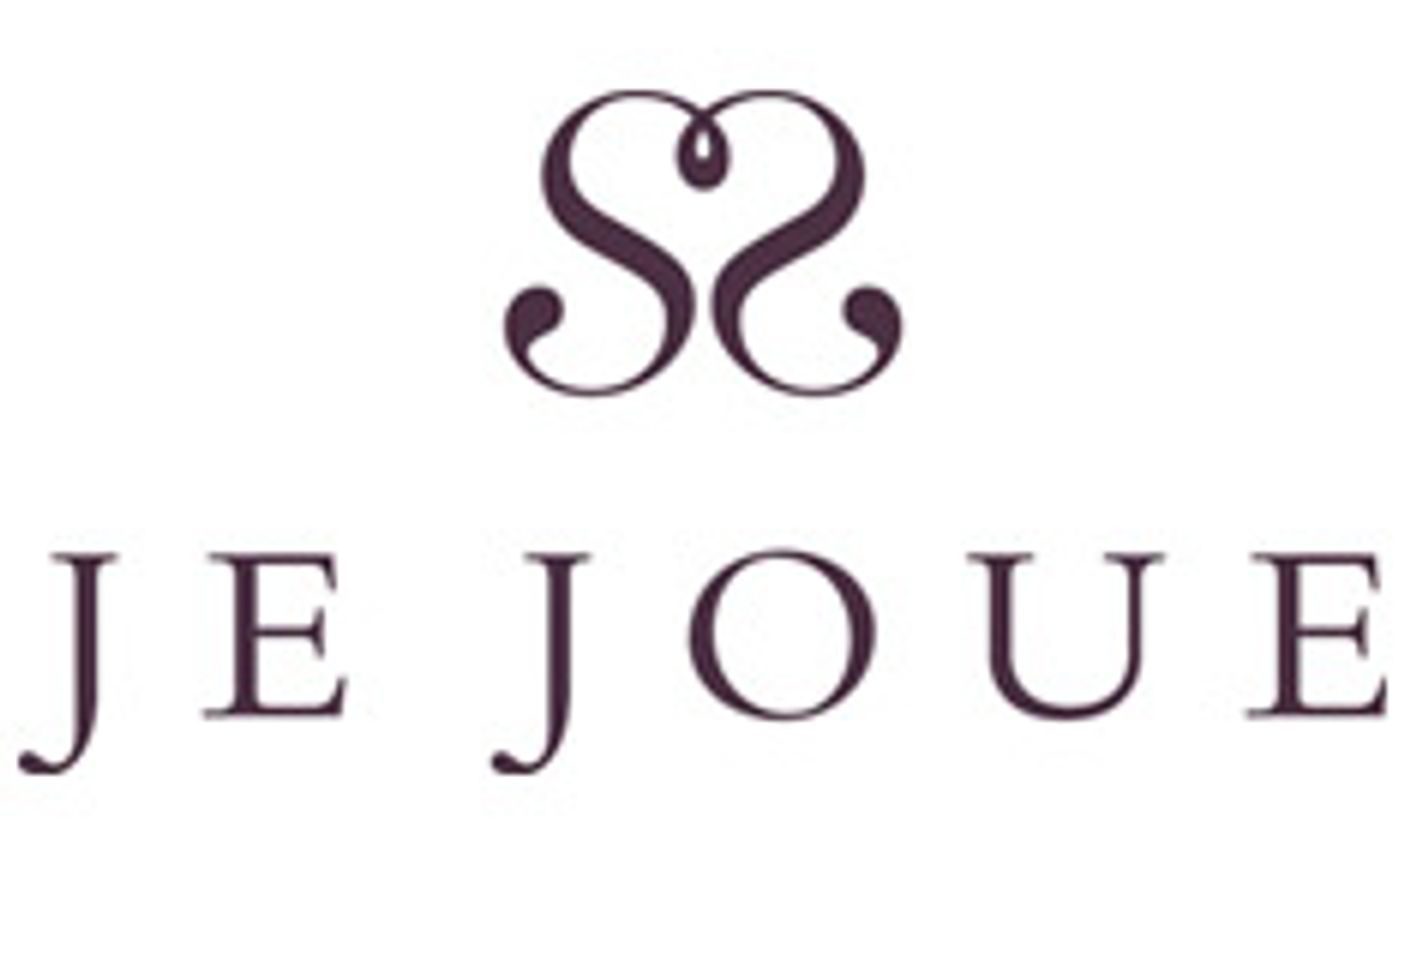 Je Joue Receives Top Honors in 3 2011 XBiz Awards Categories